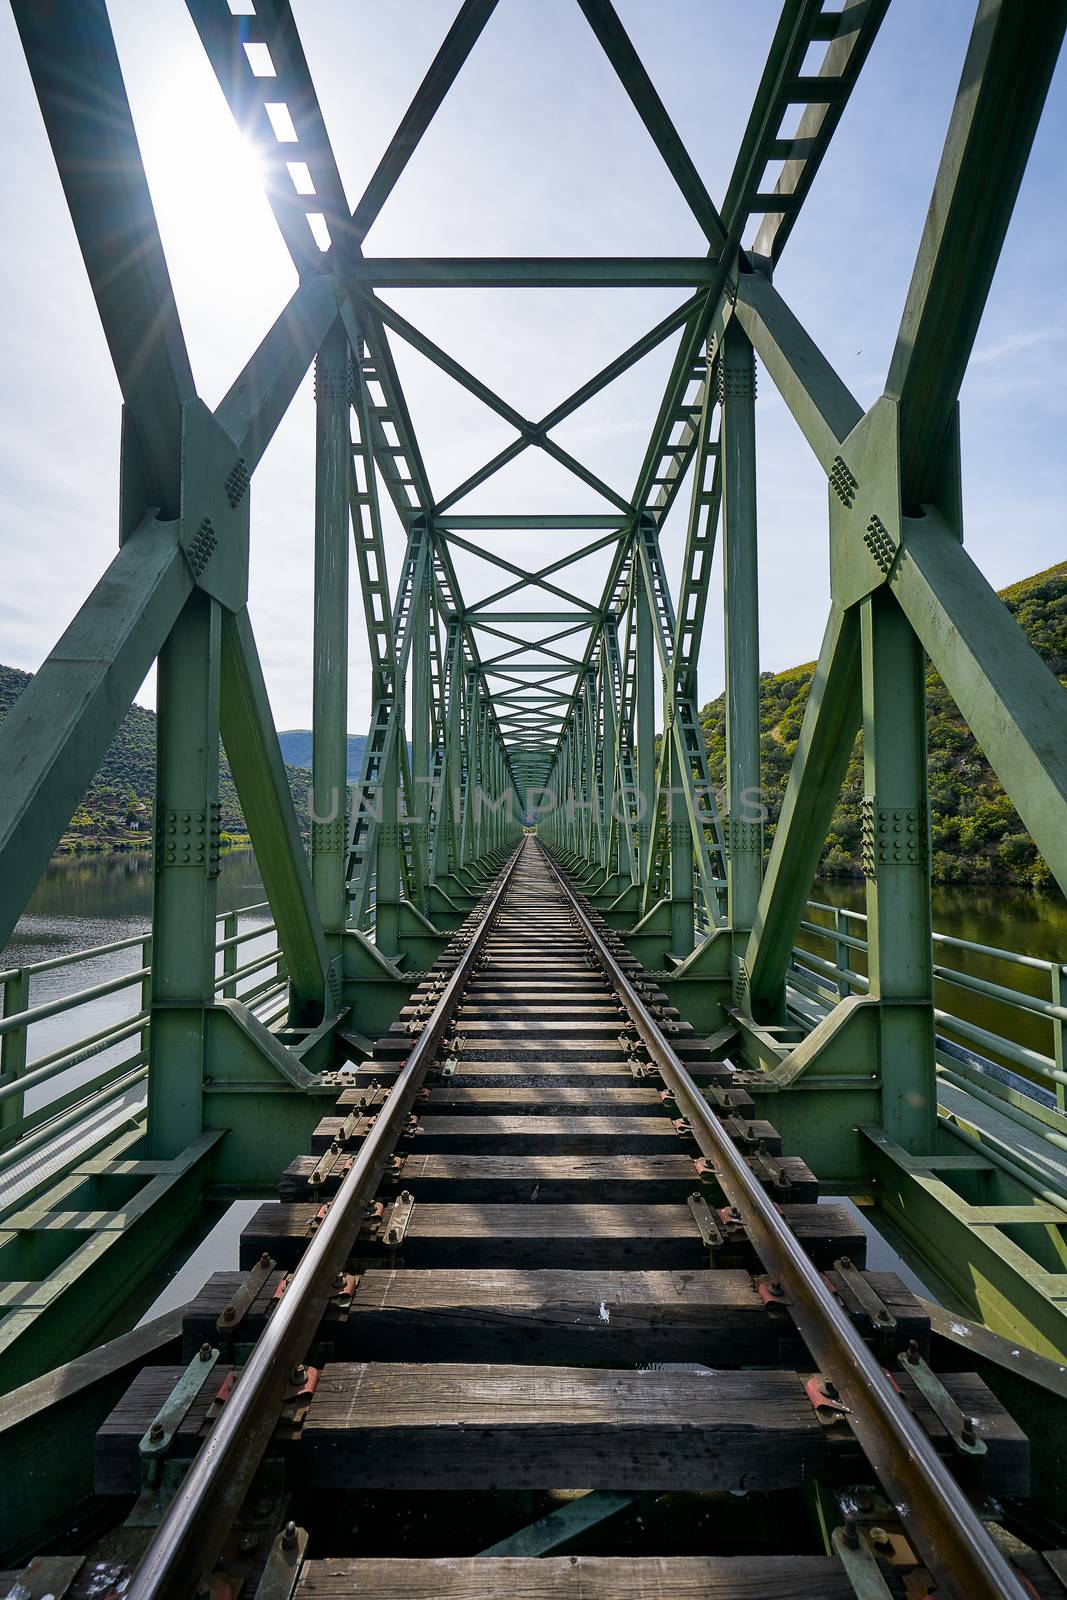 Railway bridge in Douro region in Ferradosa, Portugal by Luispinaphotography